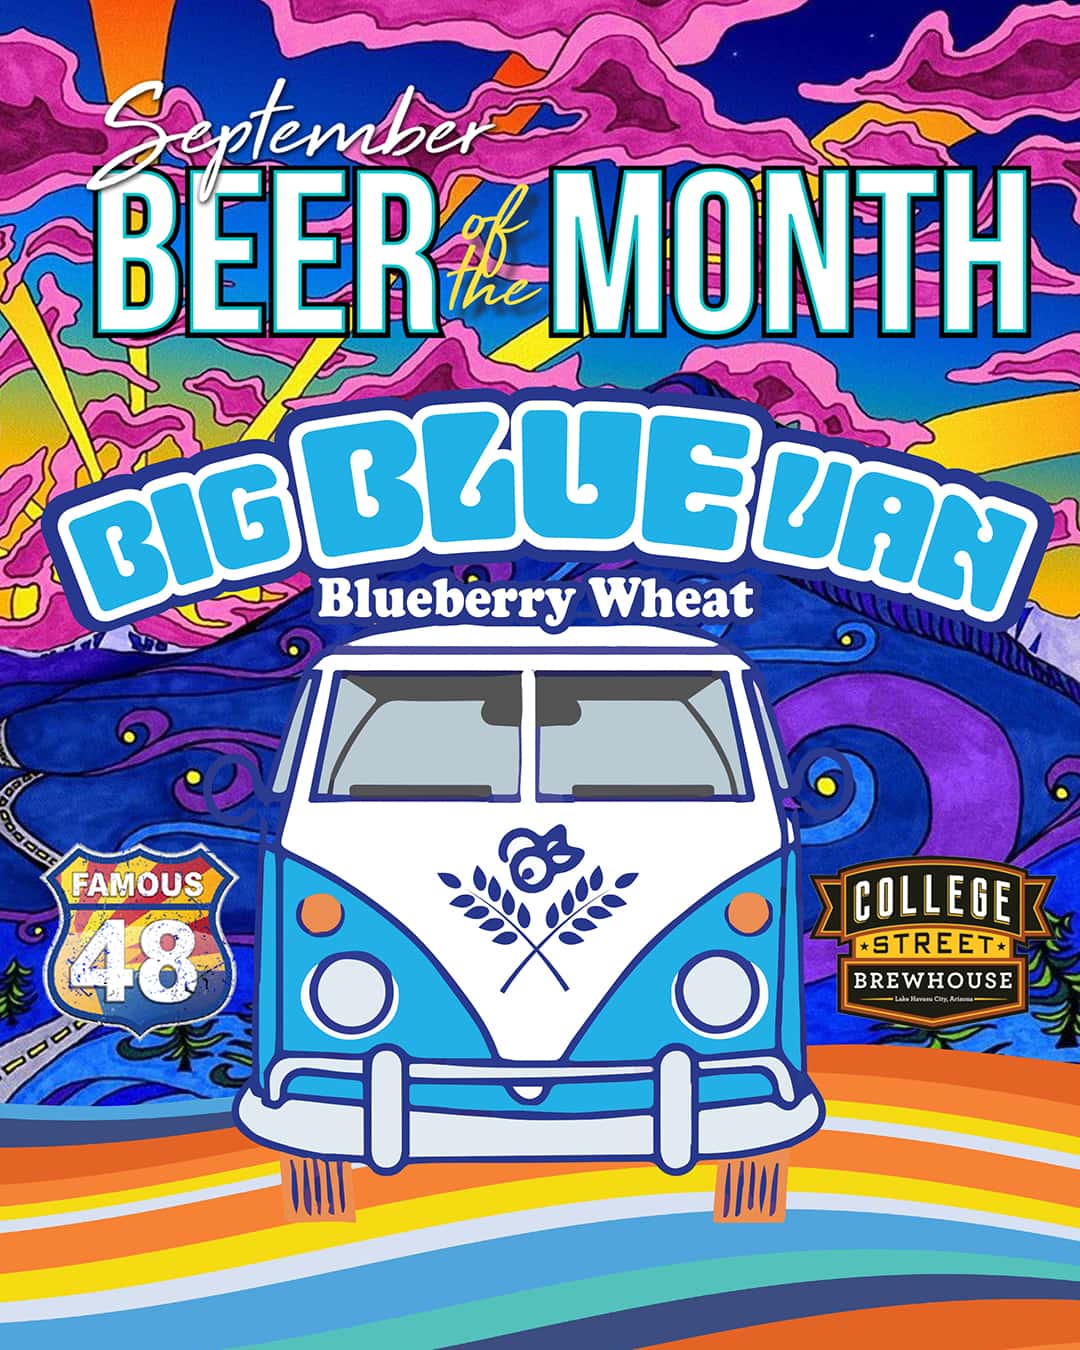 Big Blue Van Beer of the Month